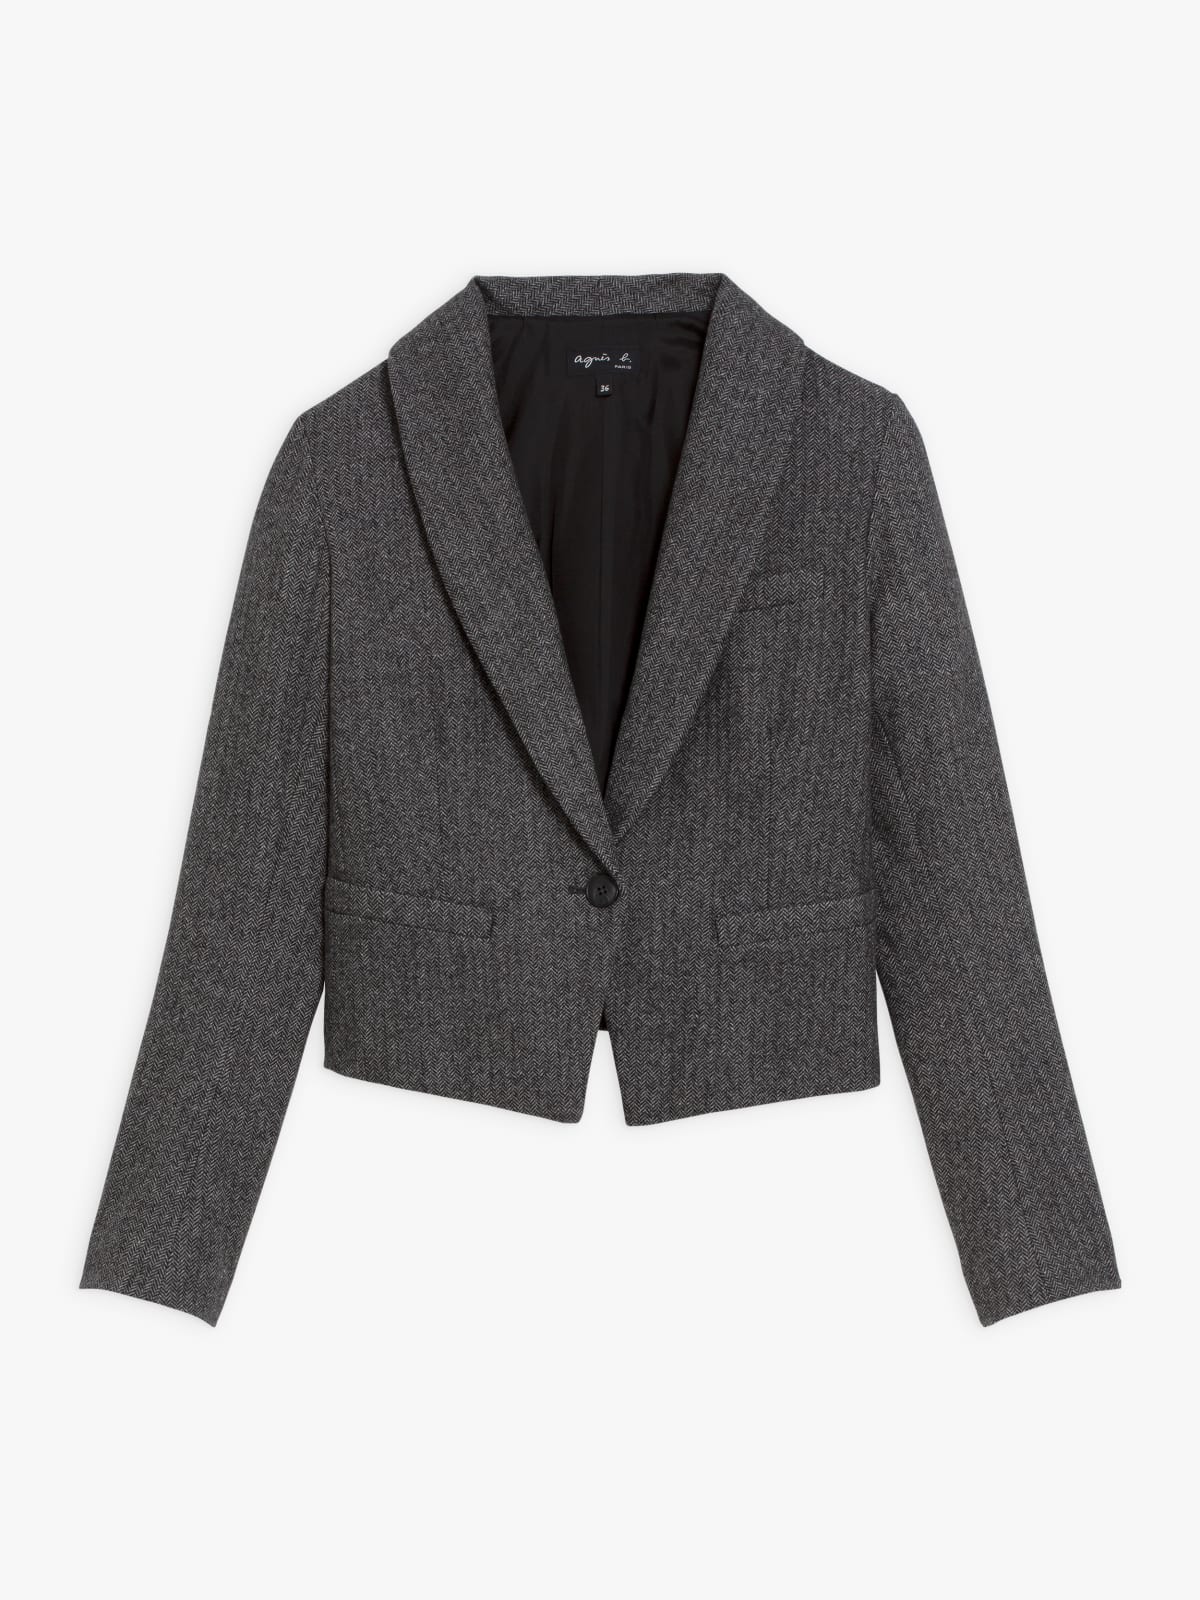 mottled grey herringbone wool blend jacket